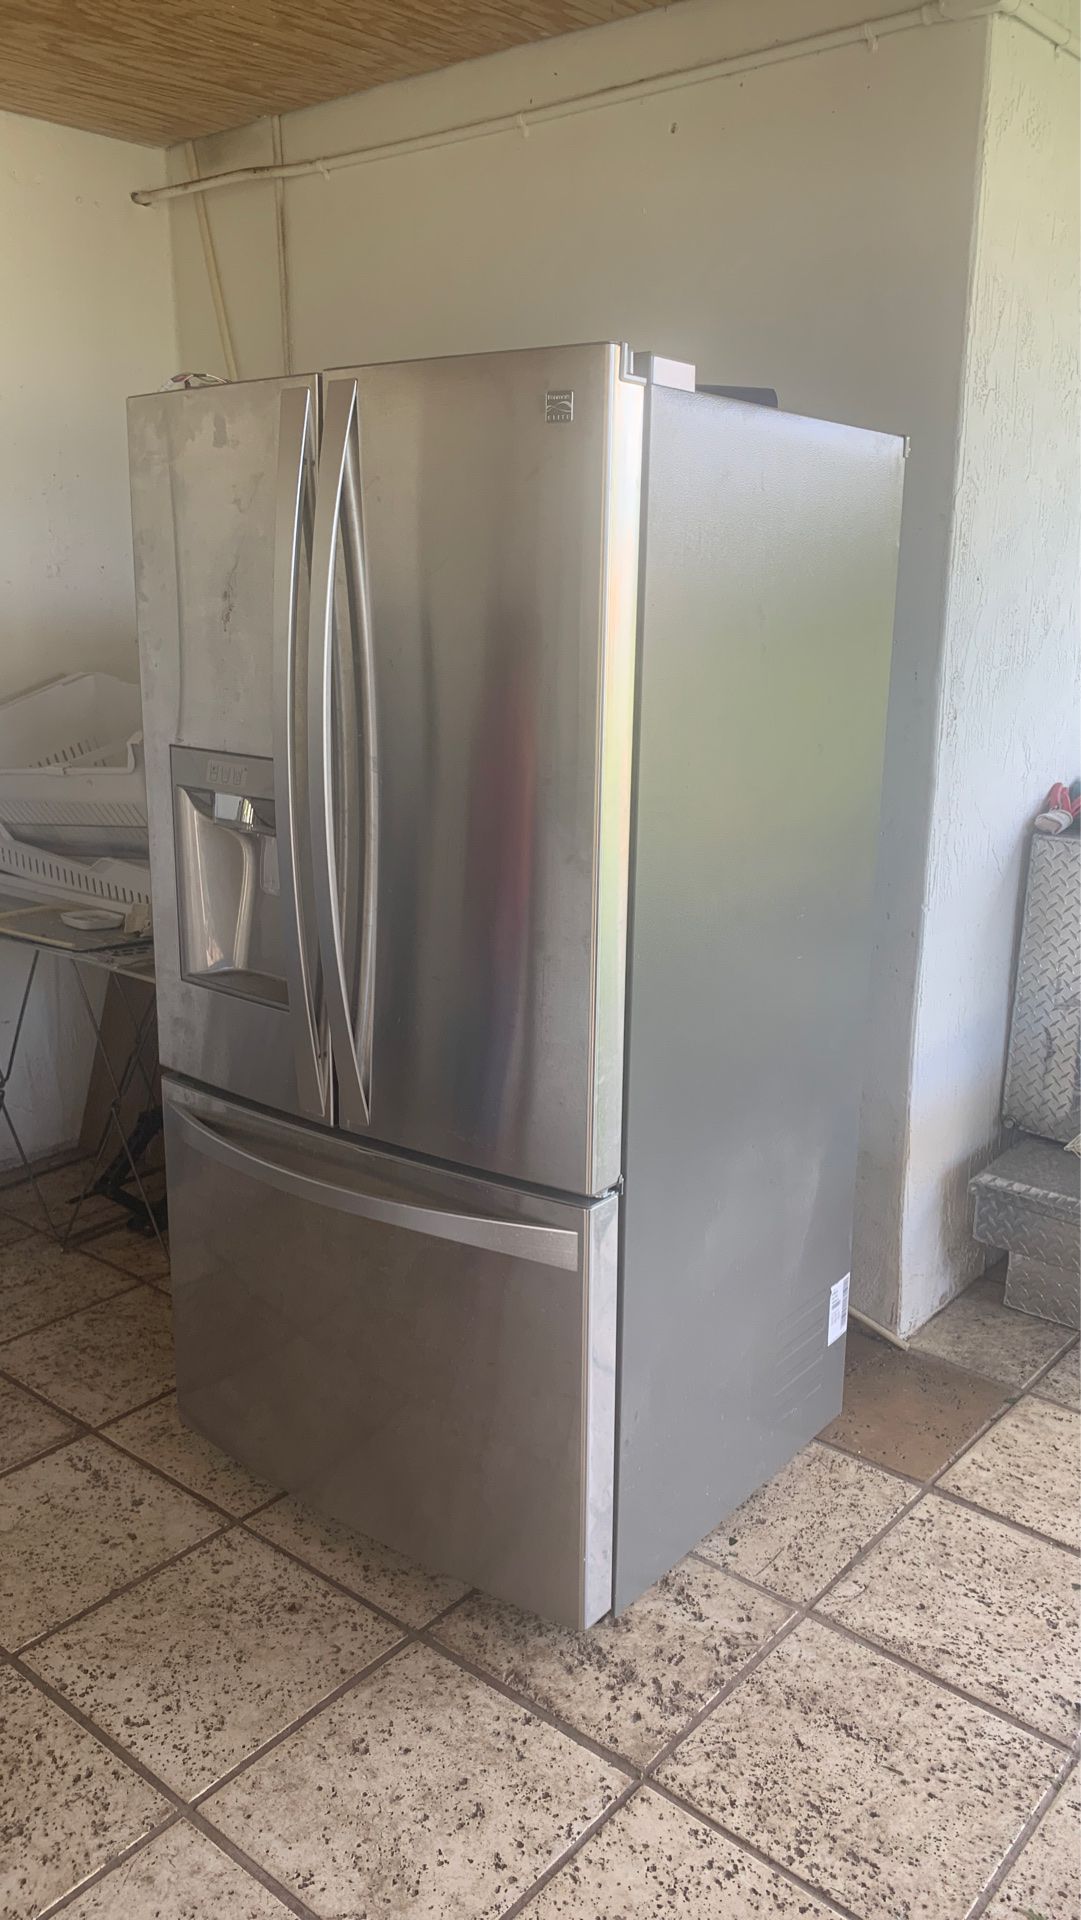 Kenmore Elite fridge